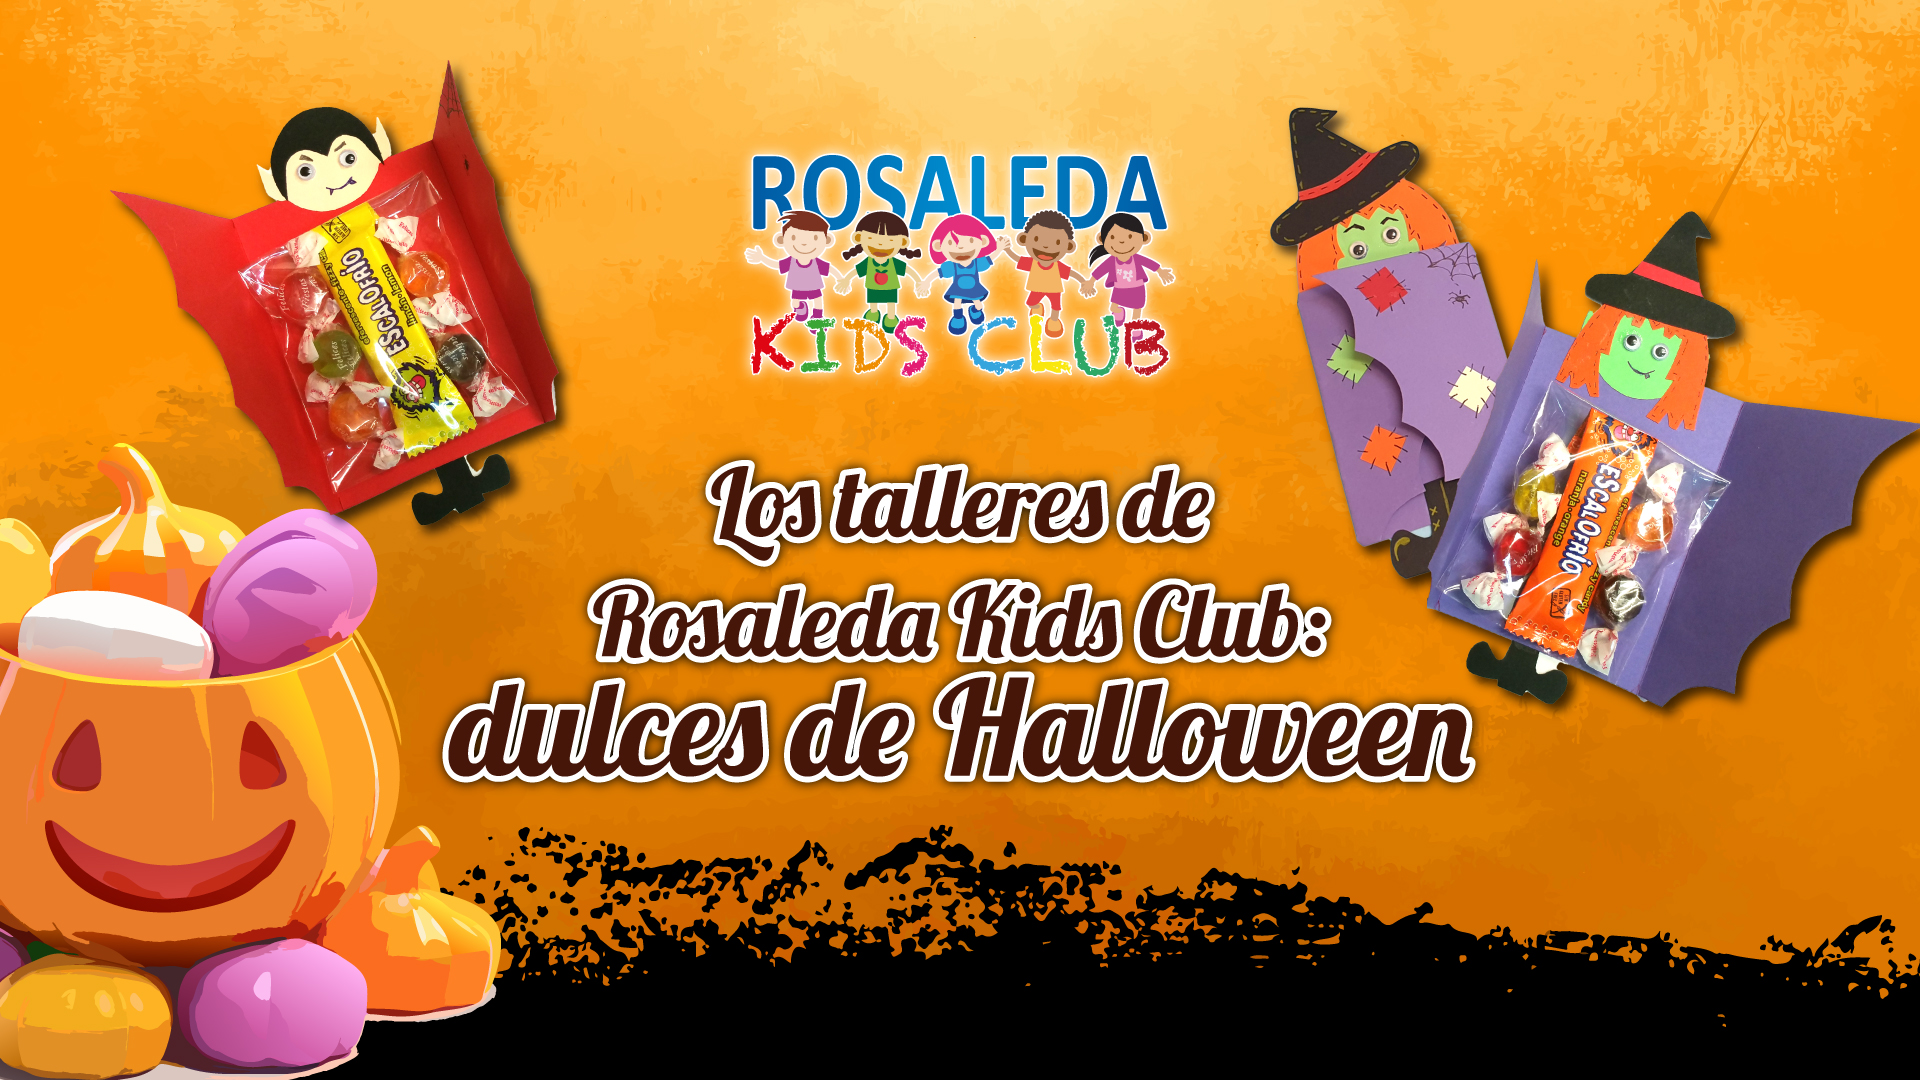 Rosaleda Kids Club: dulces de Halloween